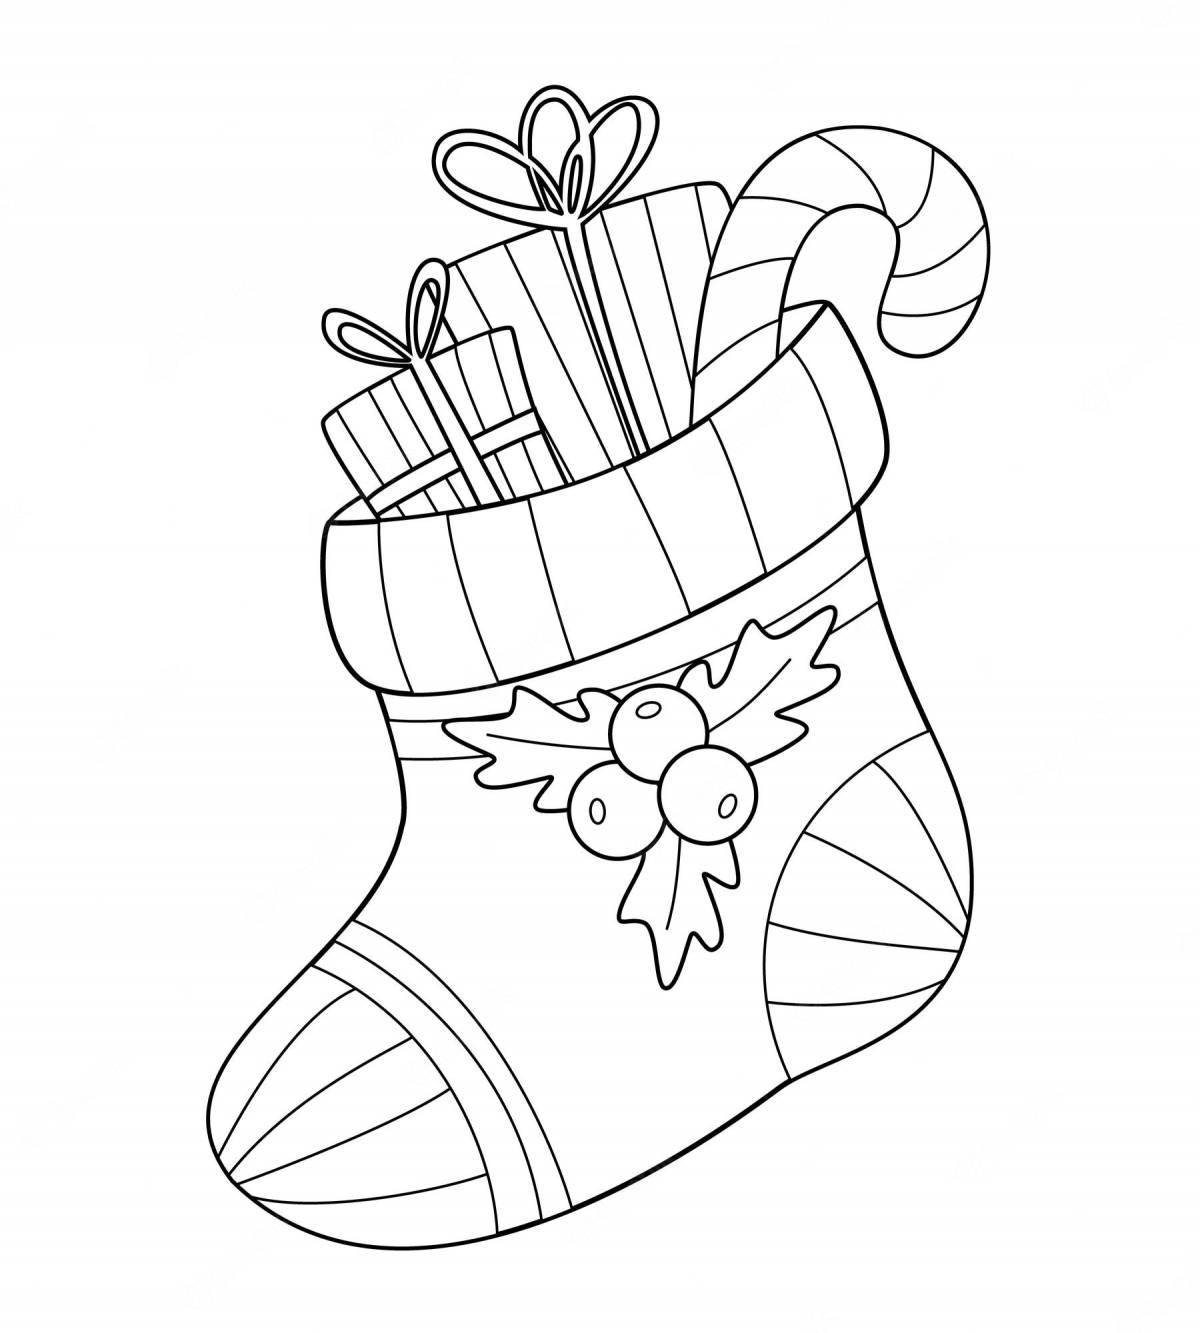 Joyful Christmas socks